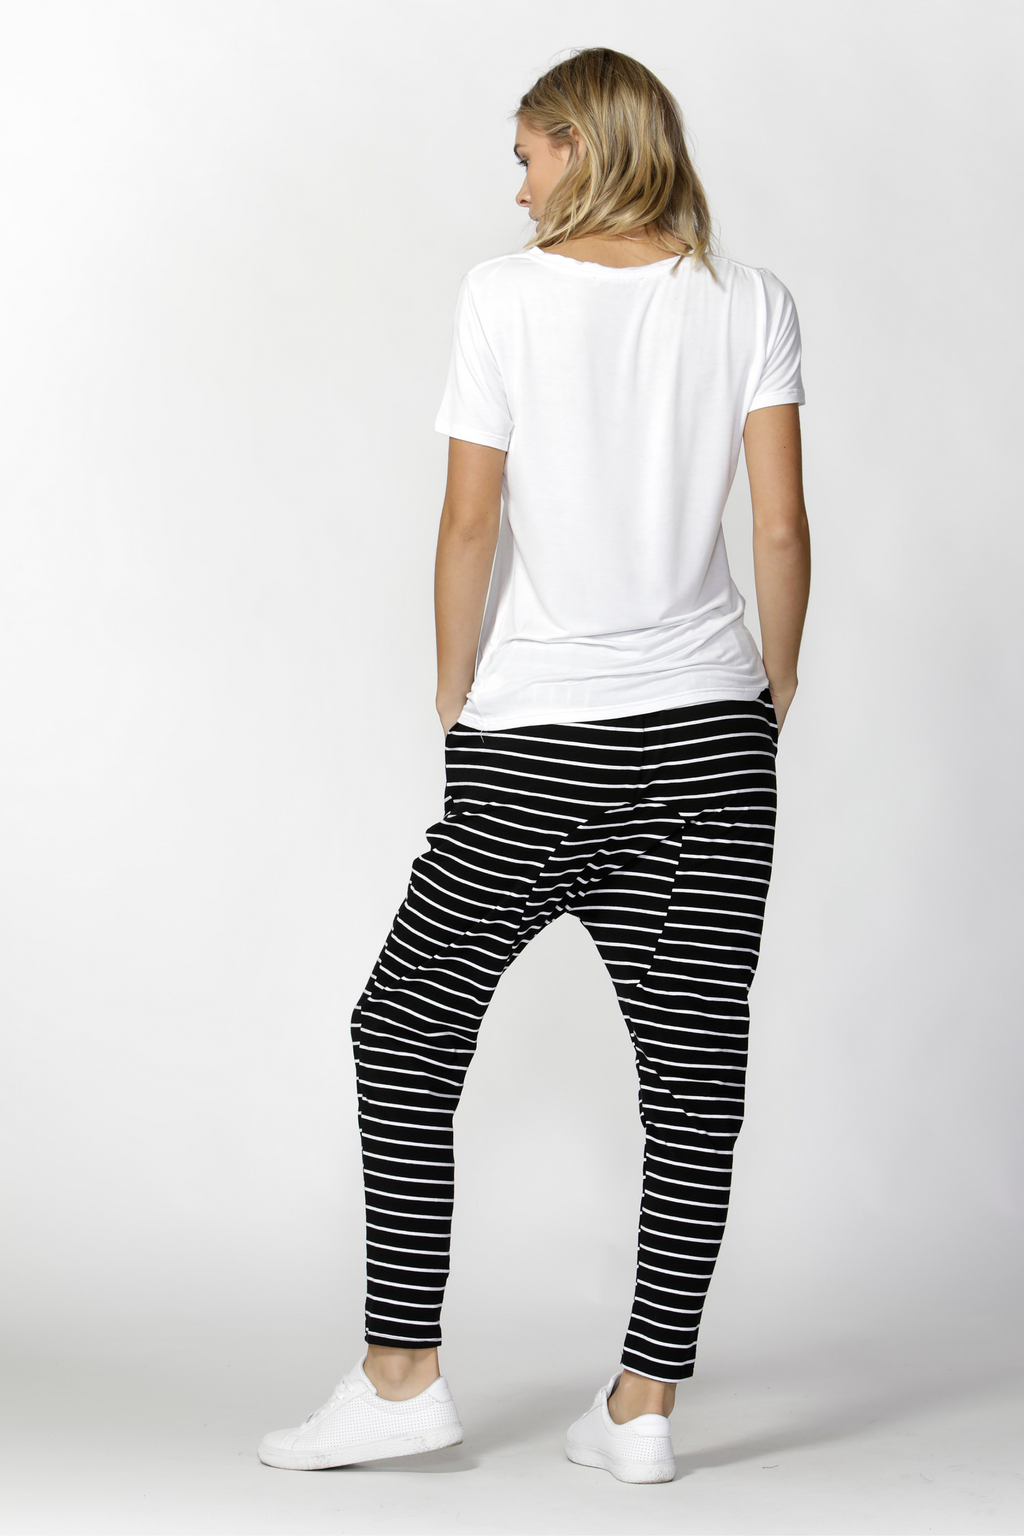 JADE PANT- Black/White Stripe